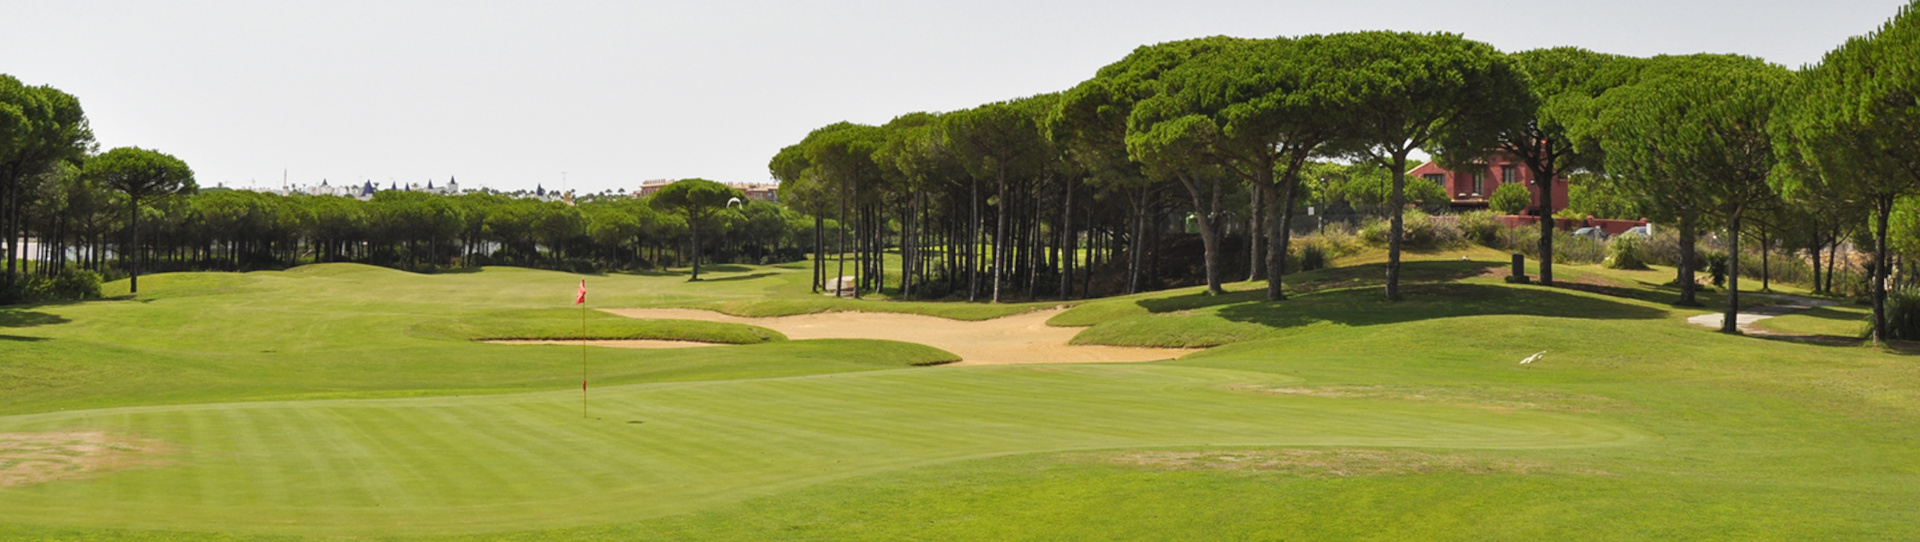 Spain golf courses - Sancti Petri Hills Golf - Photo 1